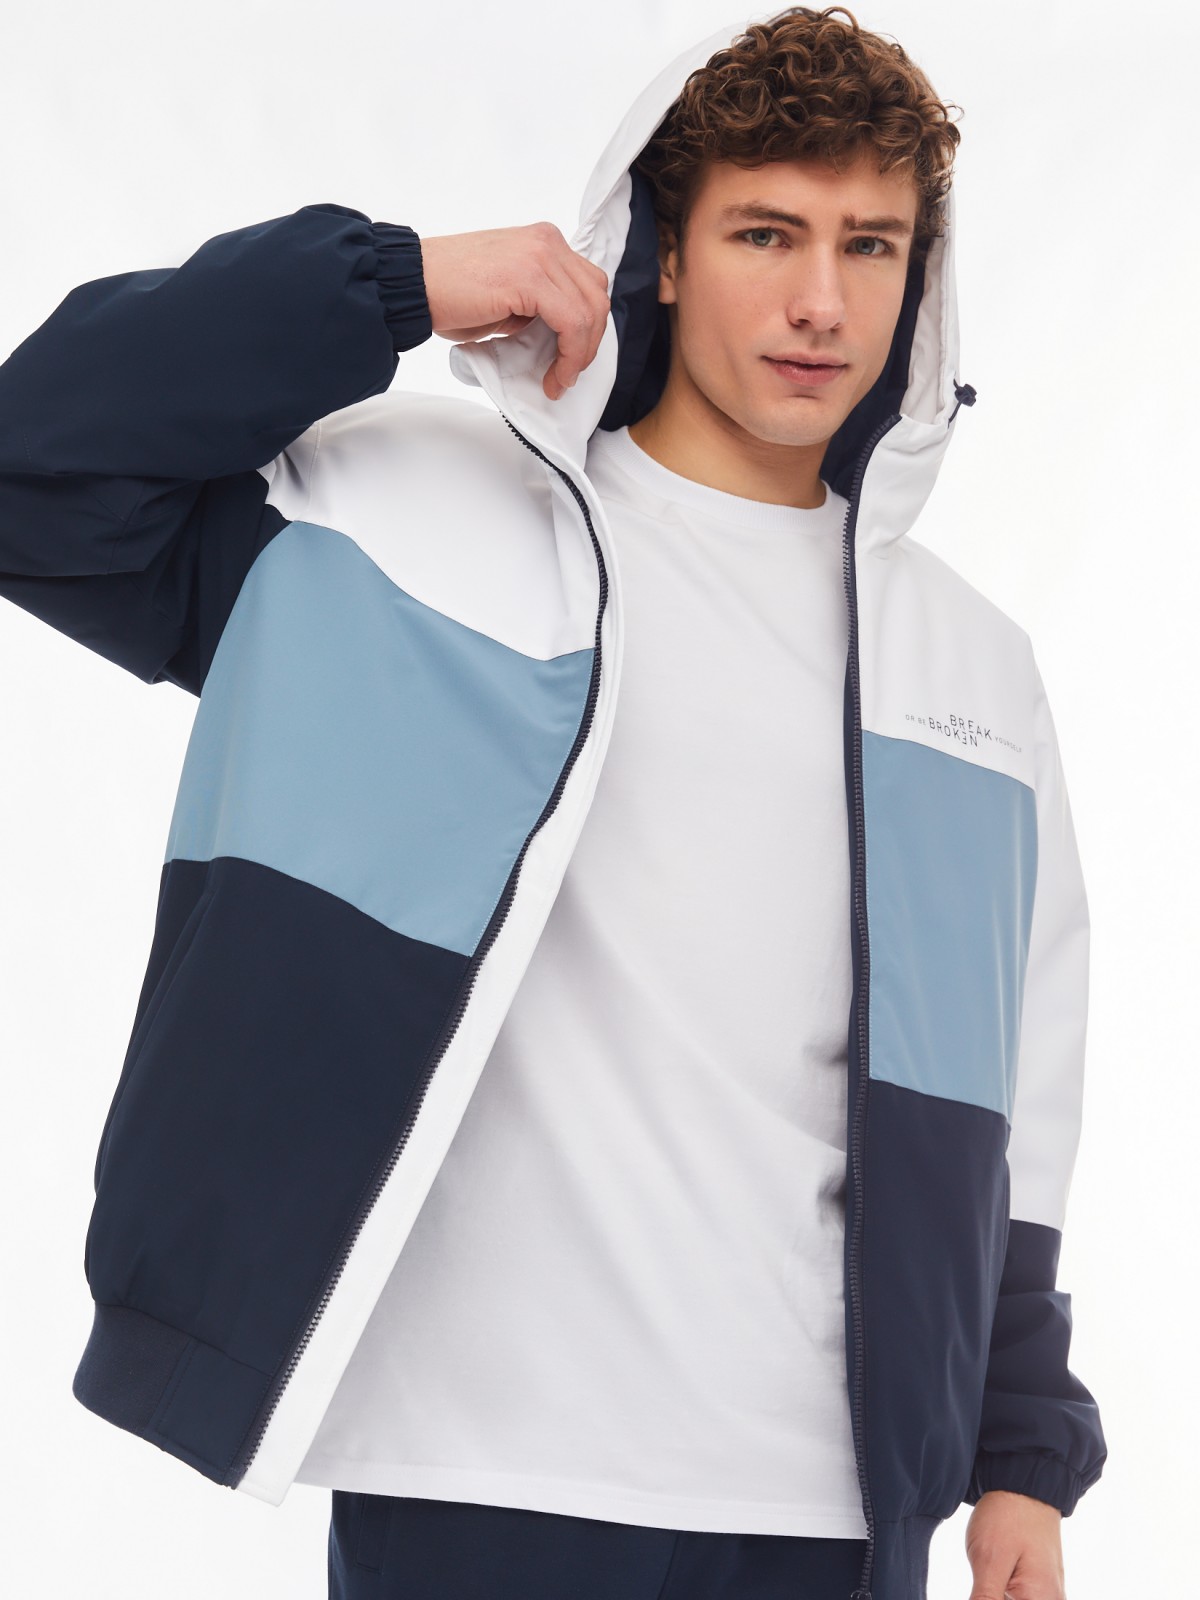 Утеплённая куртка-бомбер на синтепоне с капюшоном zolla 01412510L054, цвет синий, размер L